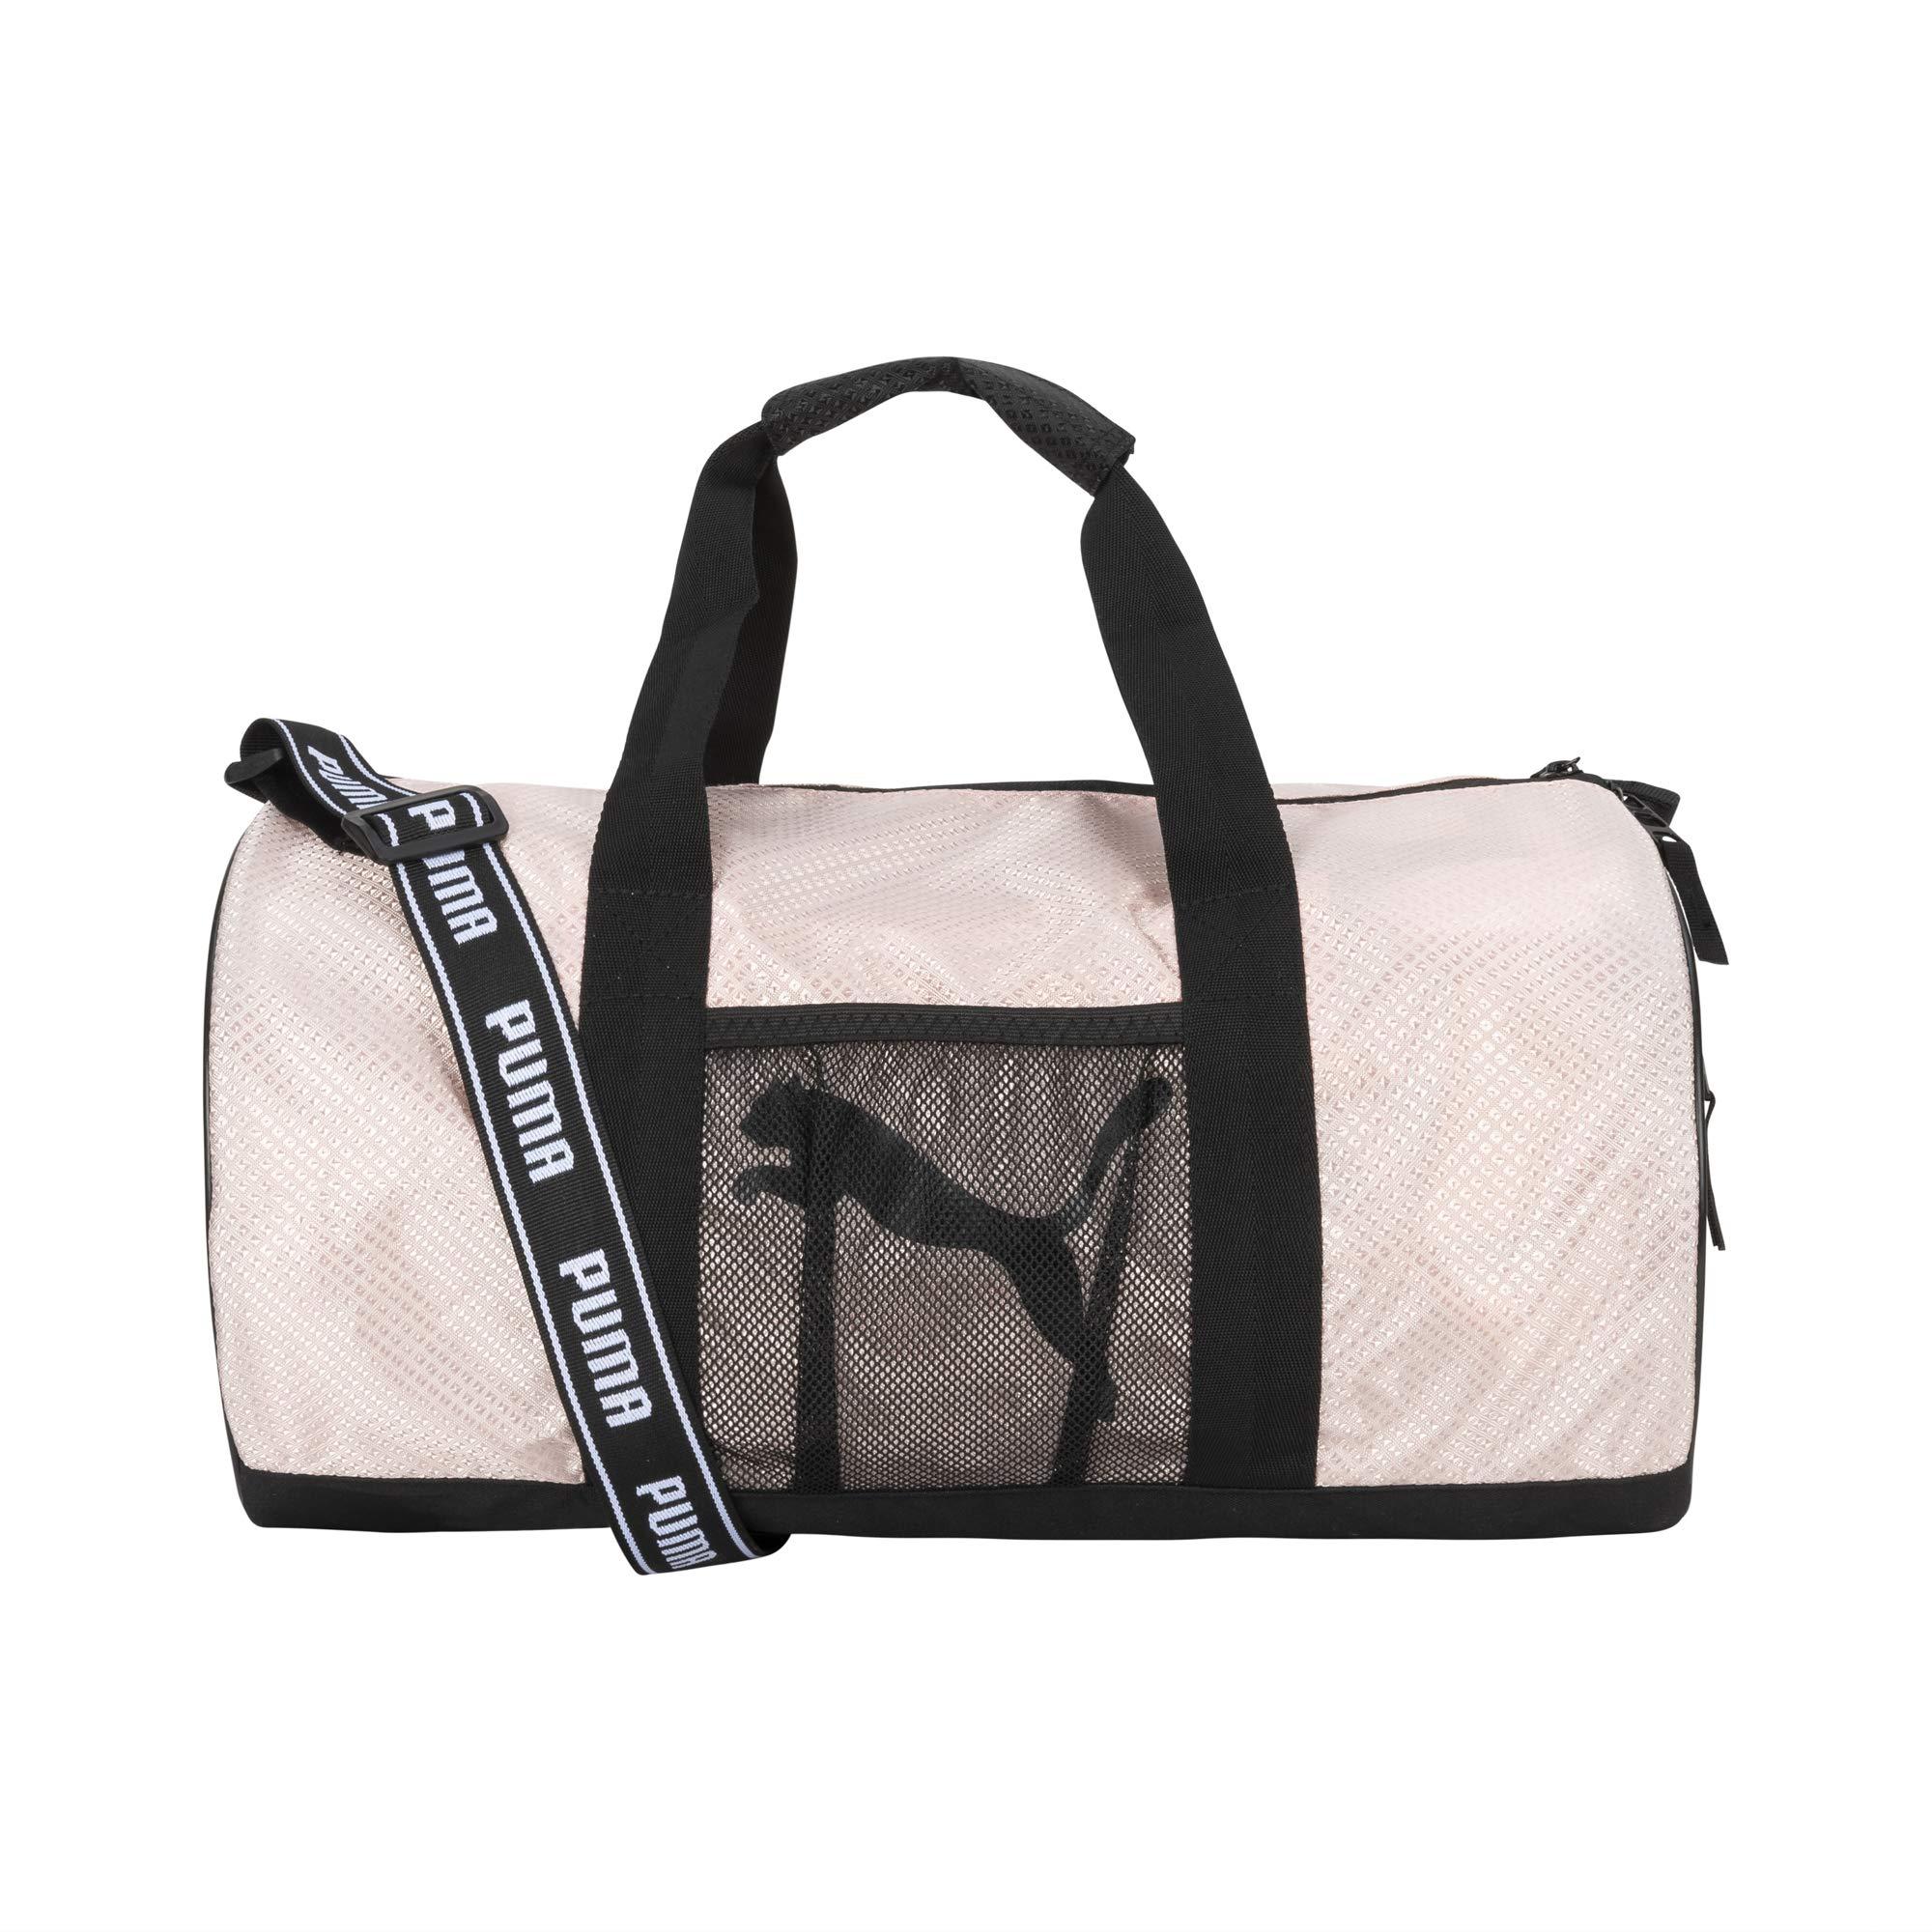 PUMA Jolt Duffel Bag in Pink/Black (Black) - Save 23% | Lyst